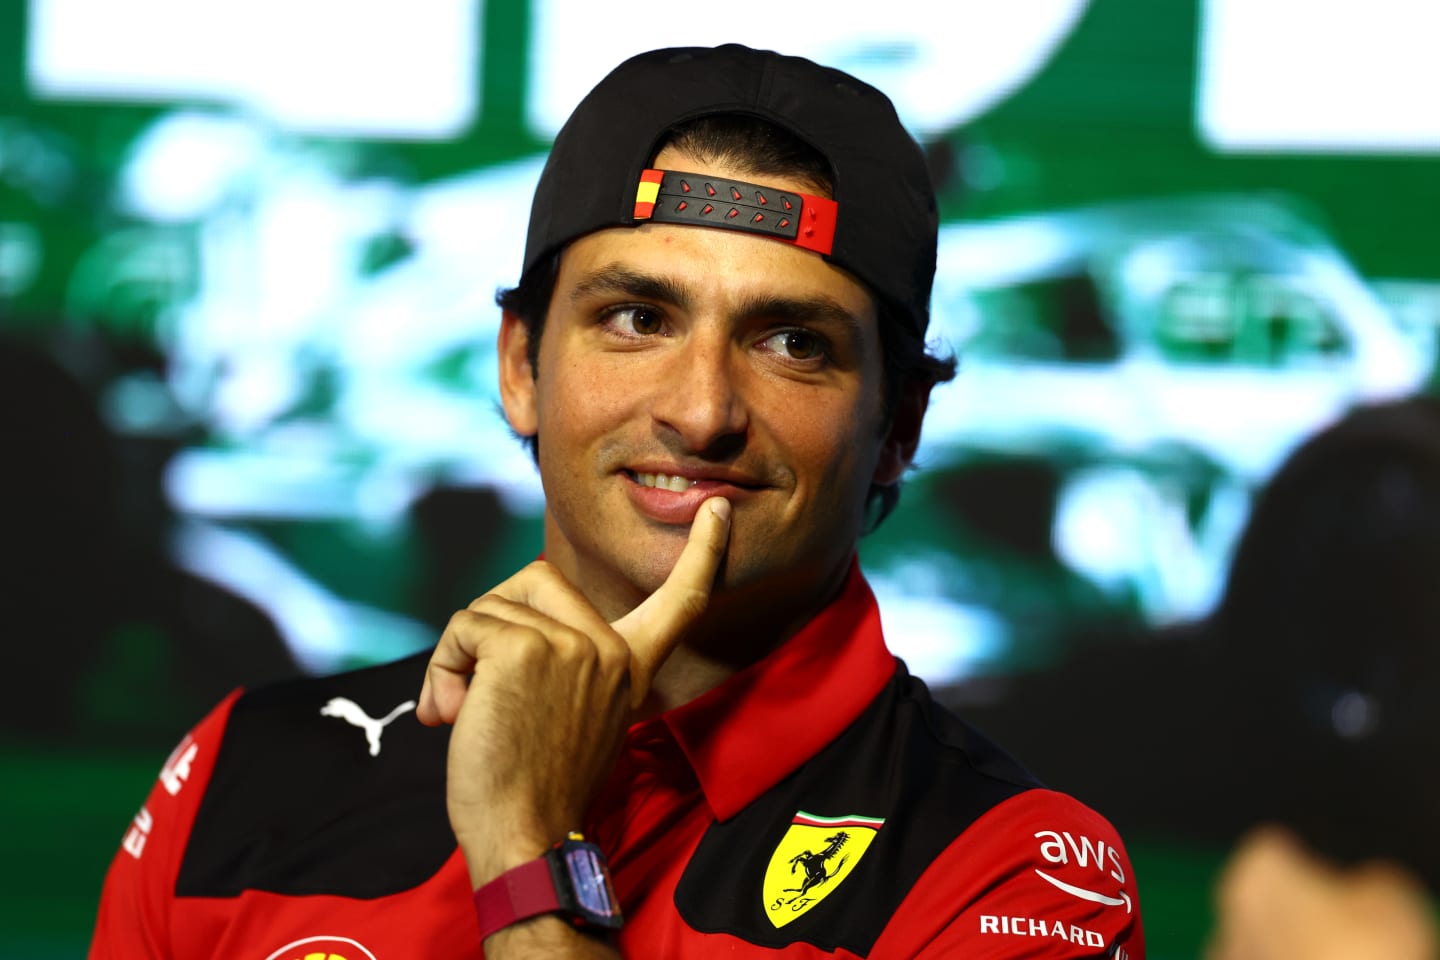 JEDDAH, SAUDI ARABIA - MARCH 16: Carlos Sainz of Spain and Ferrari attends the Drivers Press